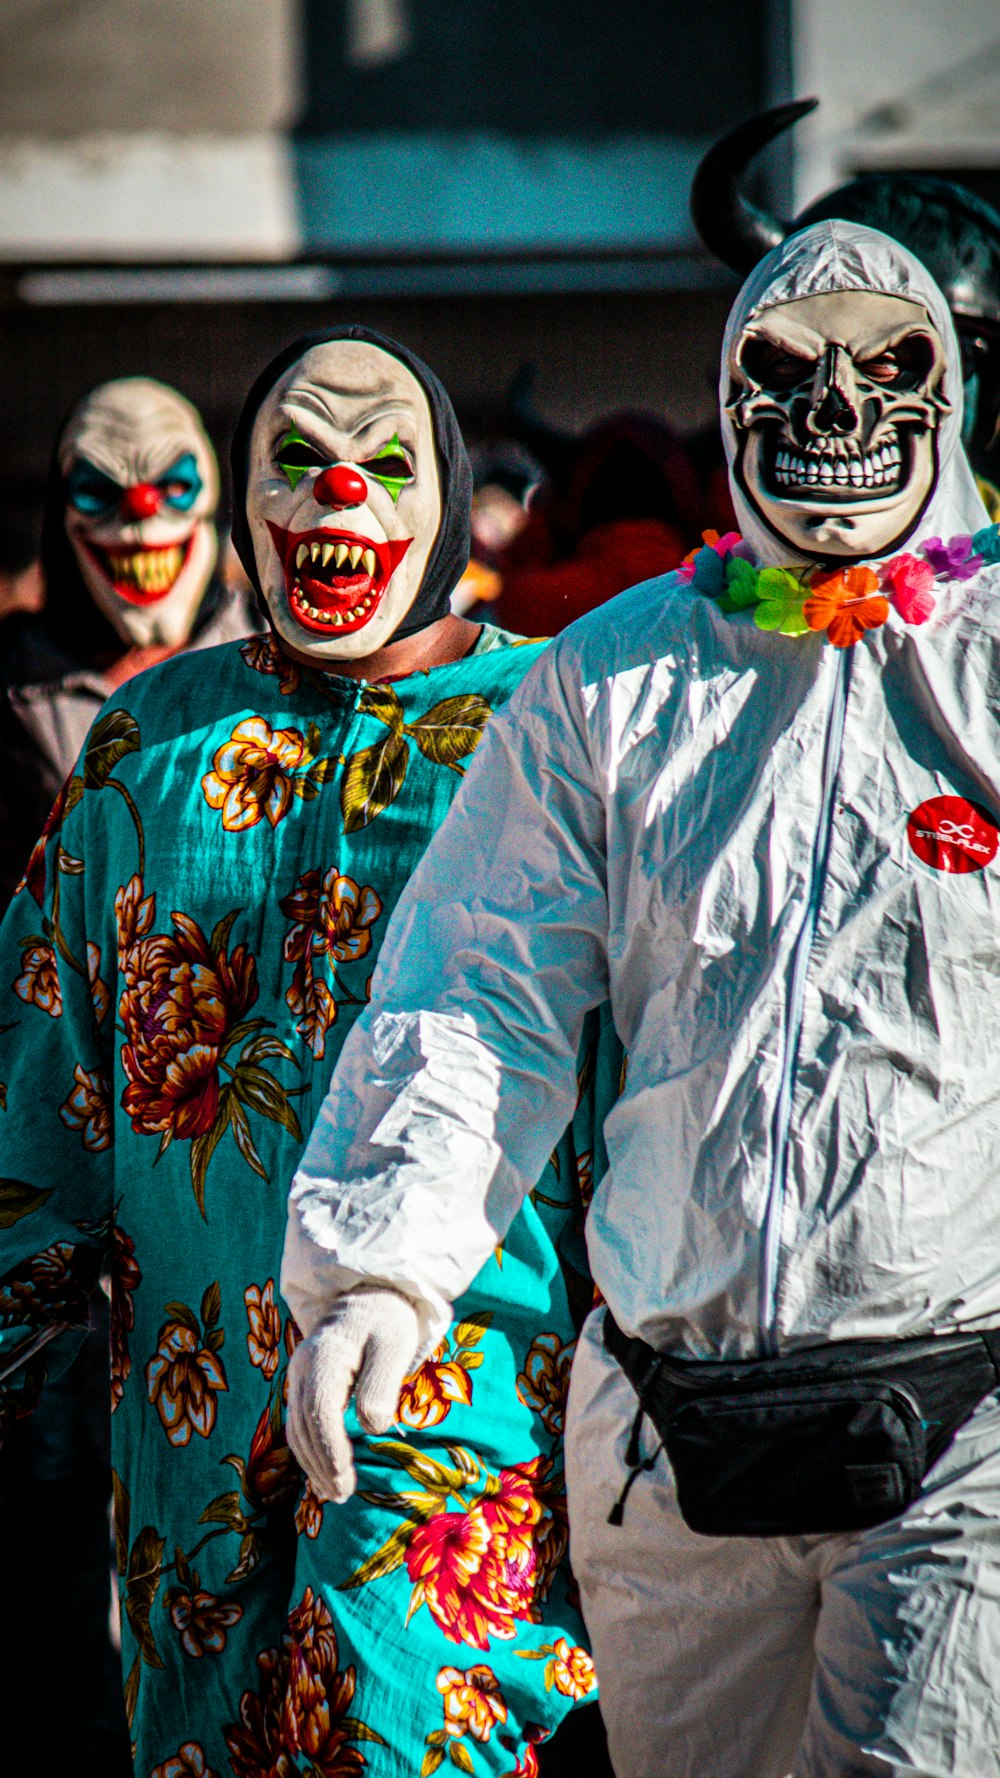 a group of clowns walking down a street